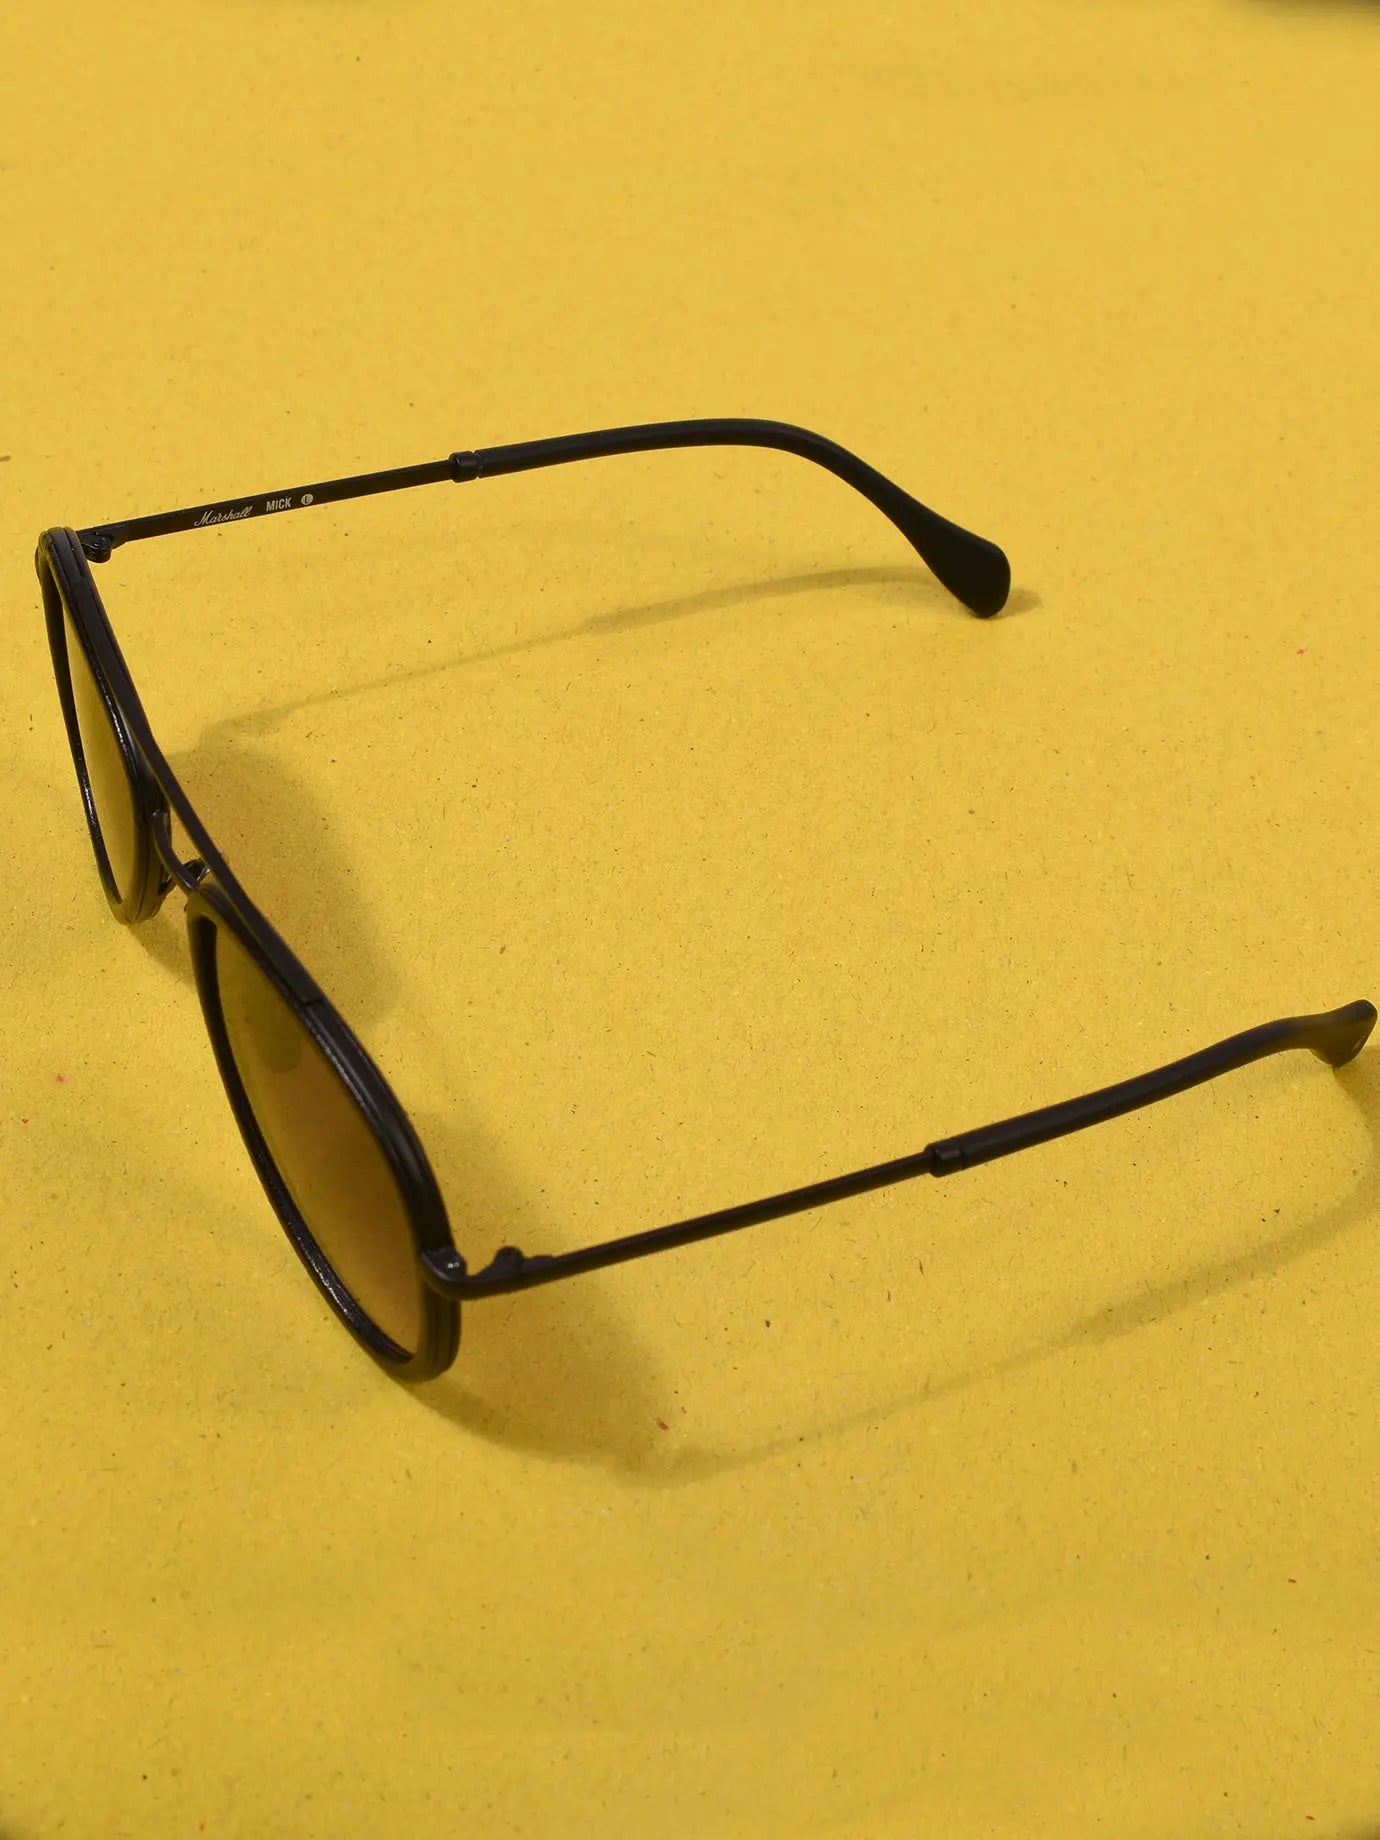 Marshall Mick L Black Leather Sun Glassses For Men-SP458